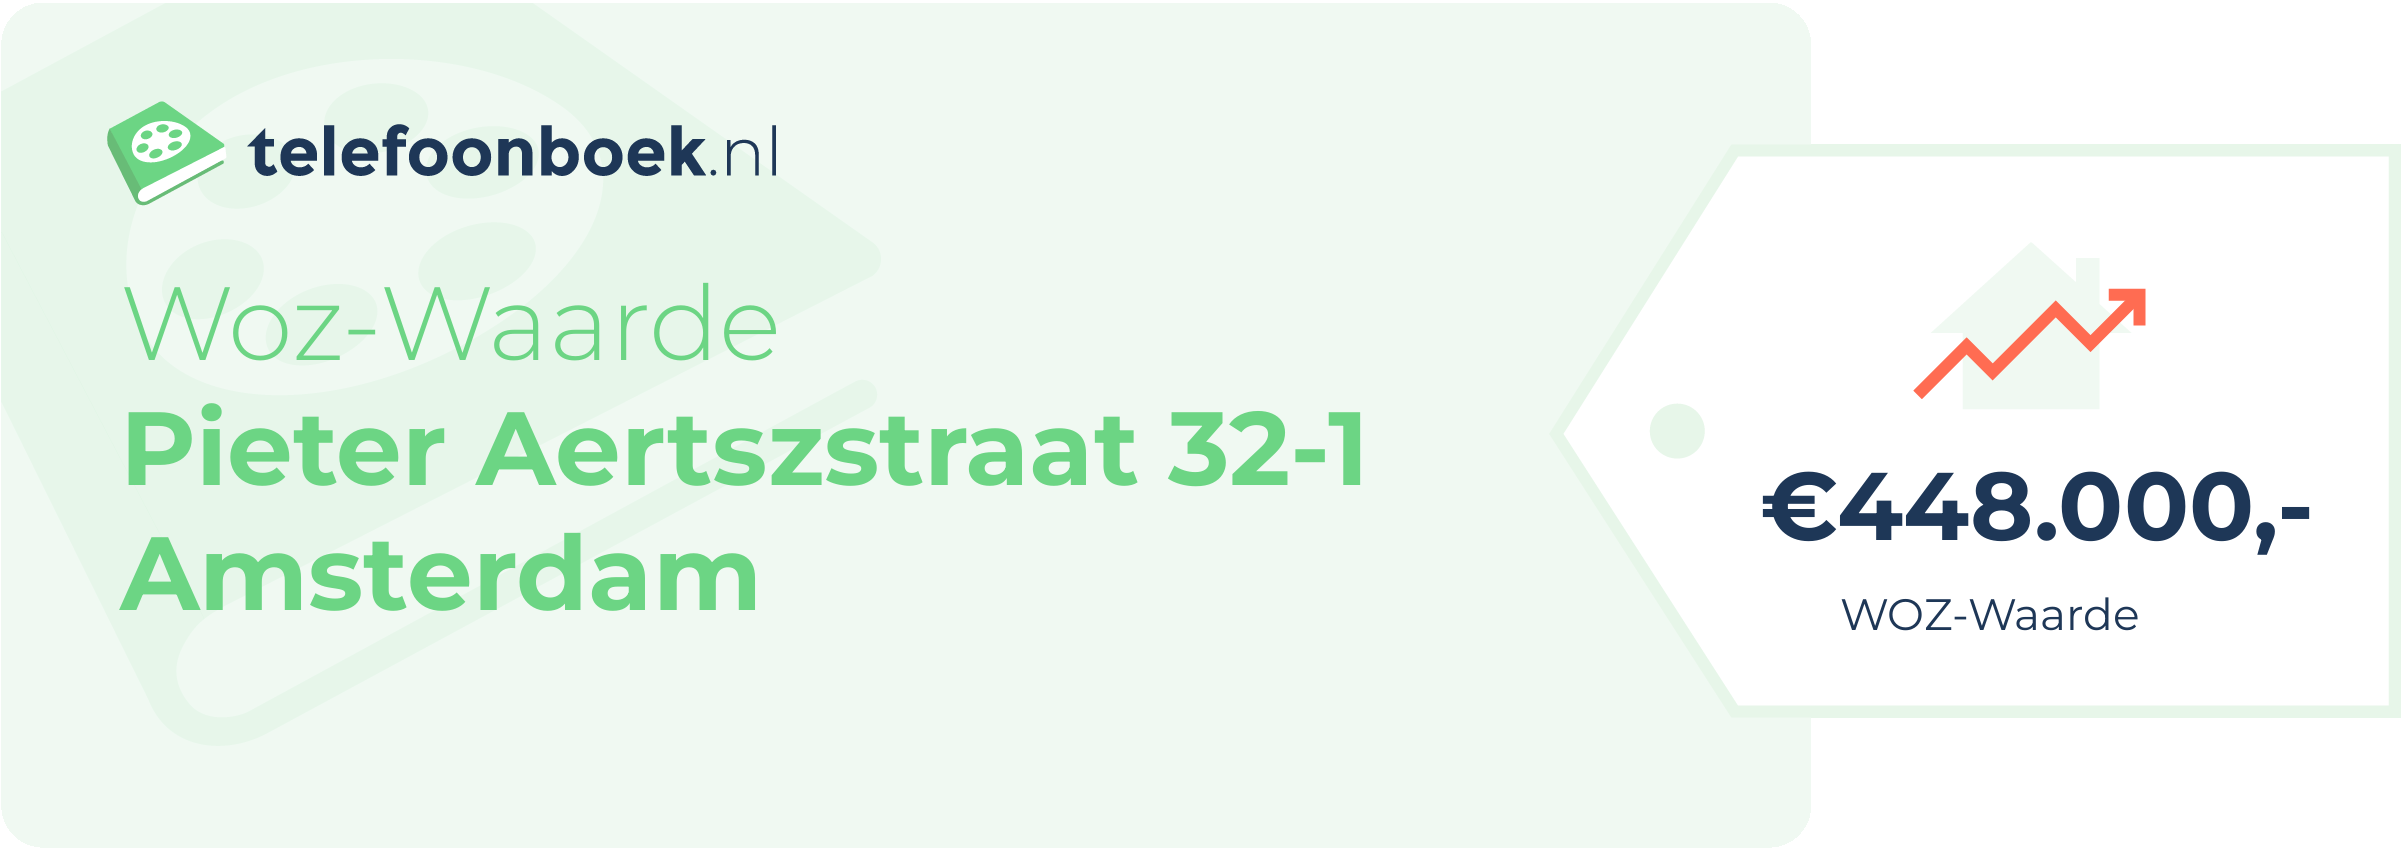 WOZ-waarde Pieter Aertszstraat 32-1 Amsterdam